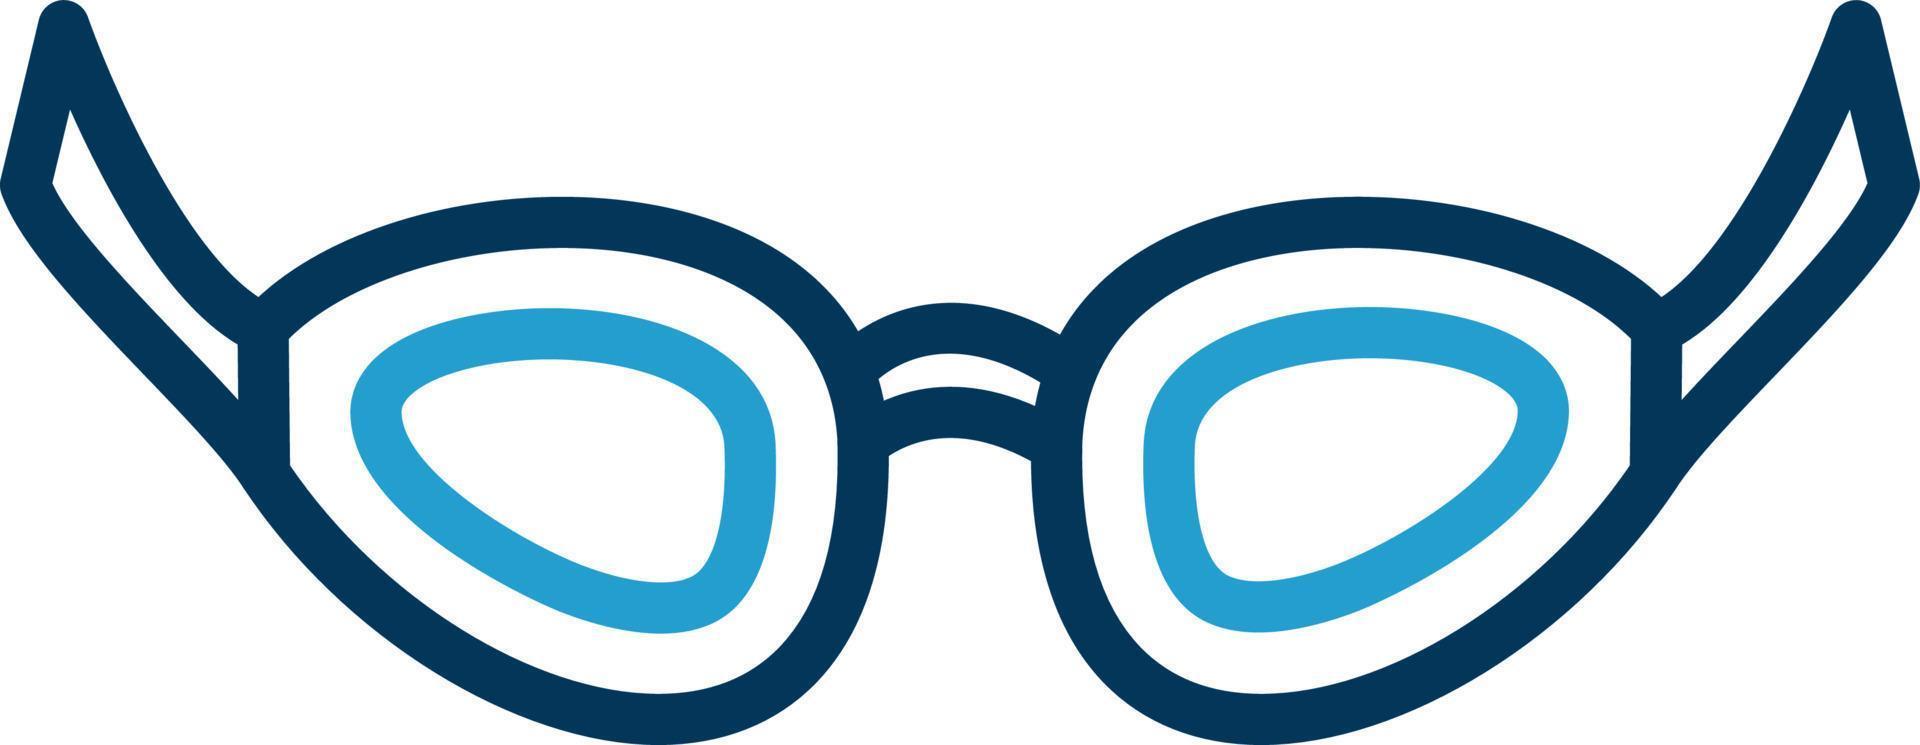 simning glasögon vektor ikon design